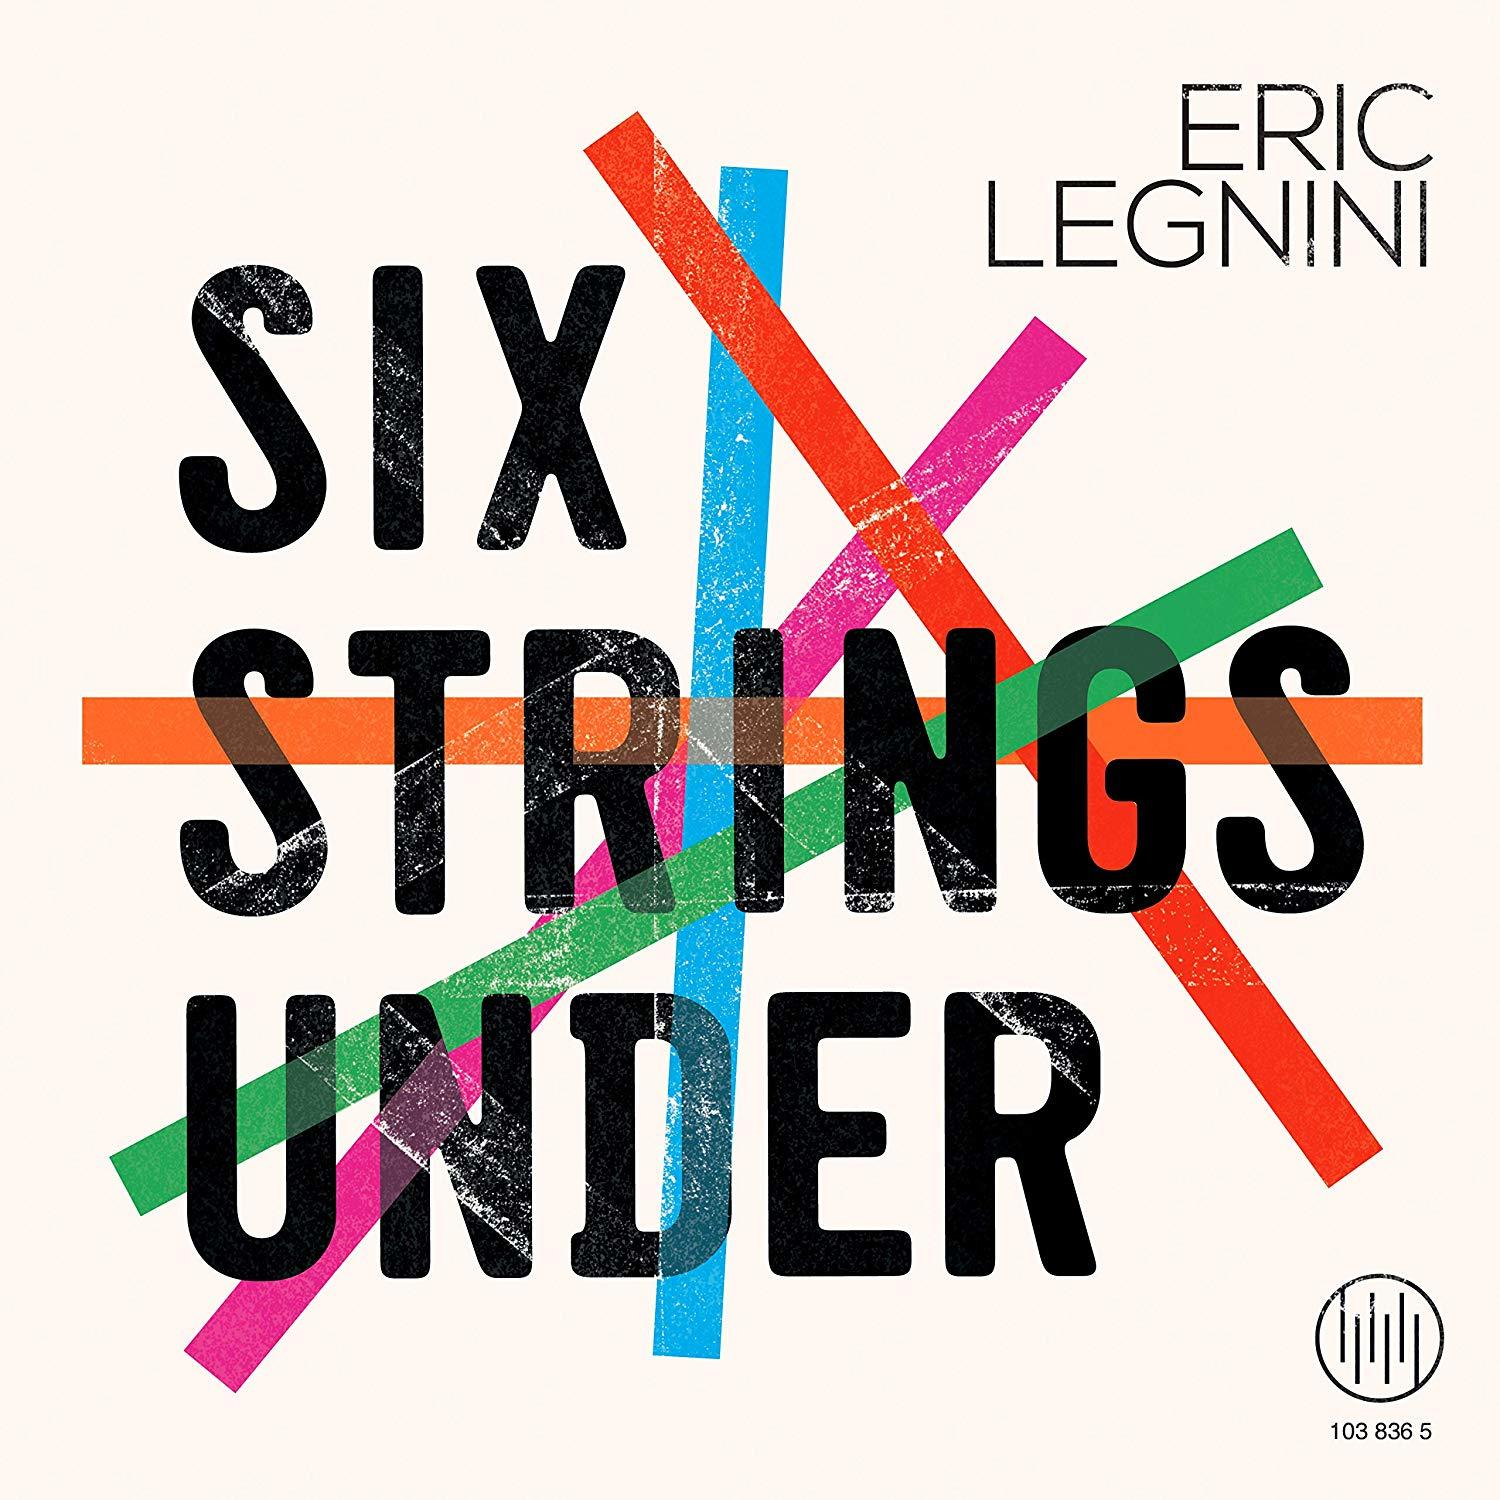 - Eric under strings Legnini six - (Vinyl)